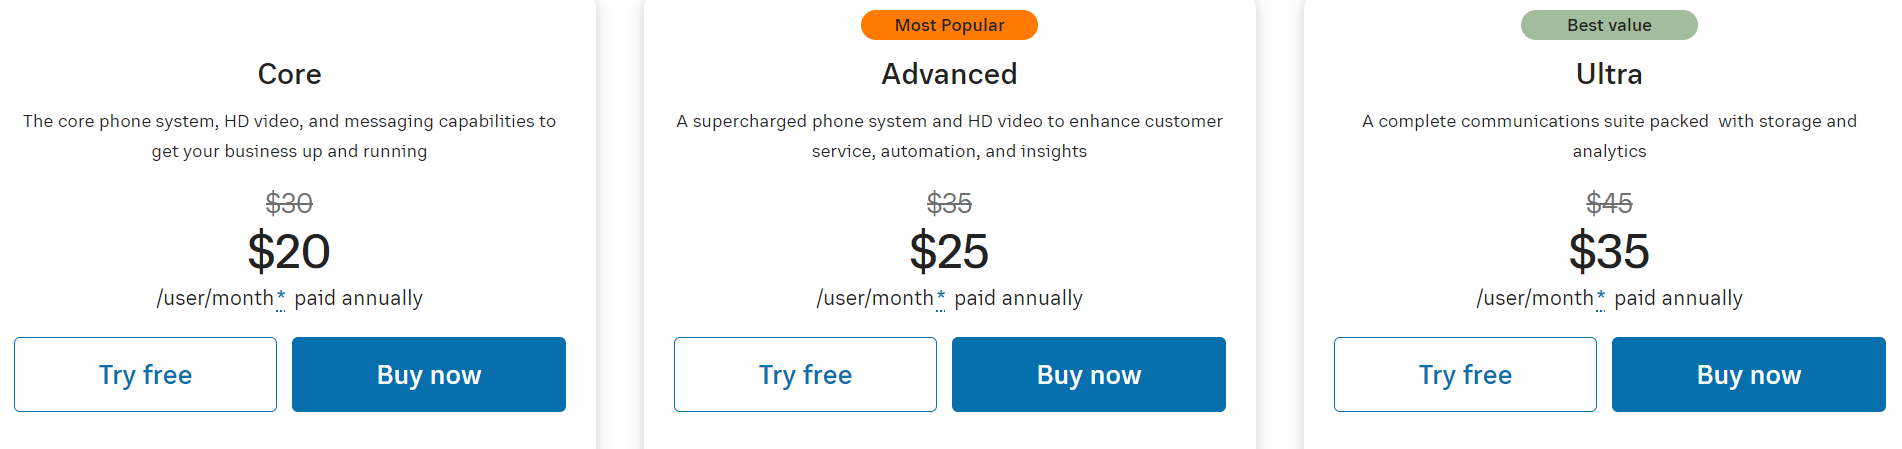 Preços de VoIP para pequenas empresas do RingCentral